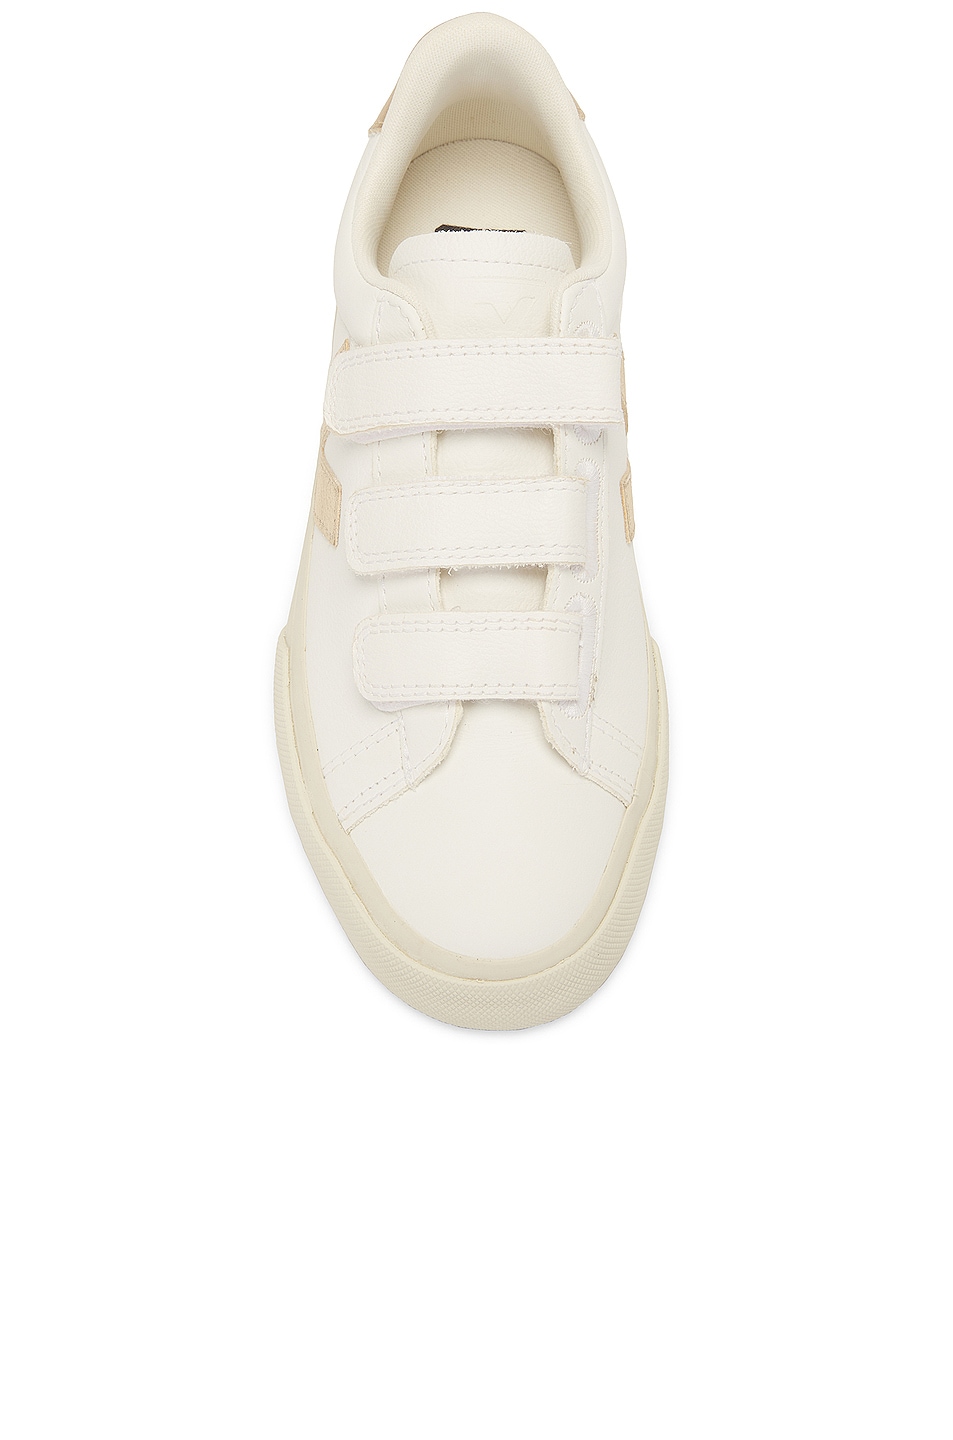 Veja Chromefree Leather Sneaker in Extra White & Platine | FWRD